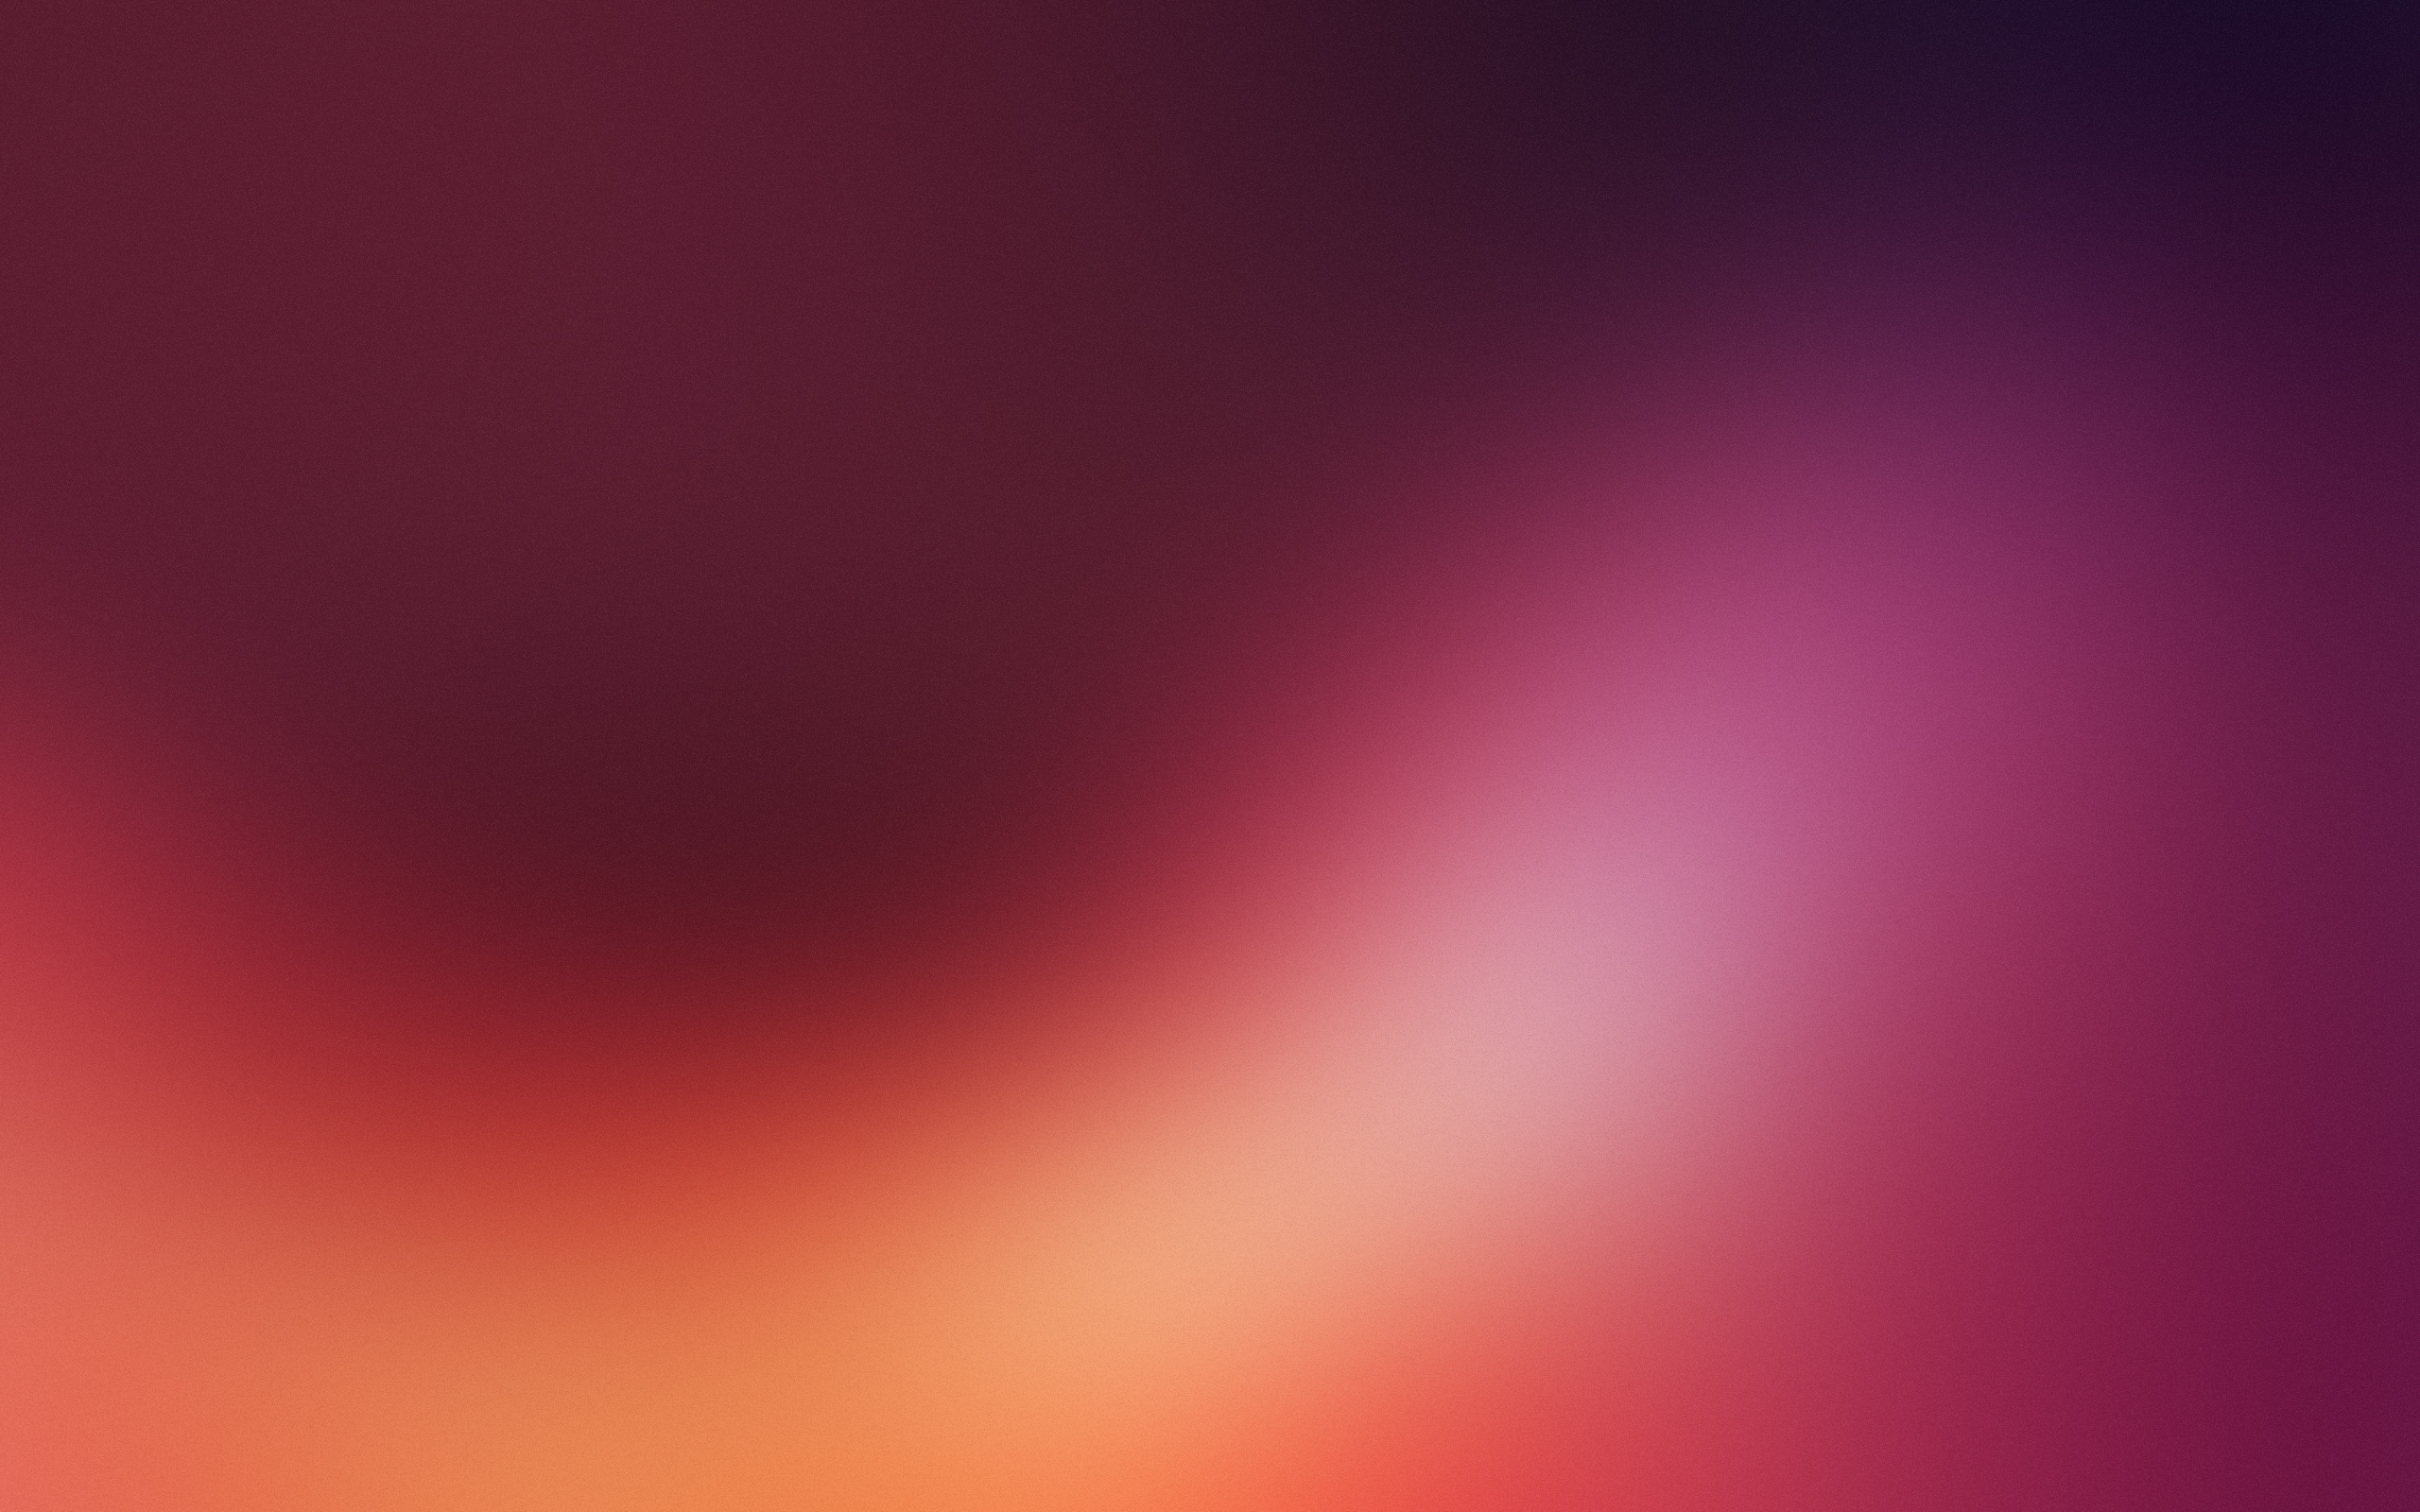 ubuntu wallpaper,sky,red,pink,purple,blue